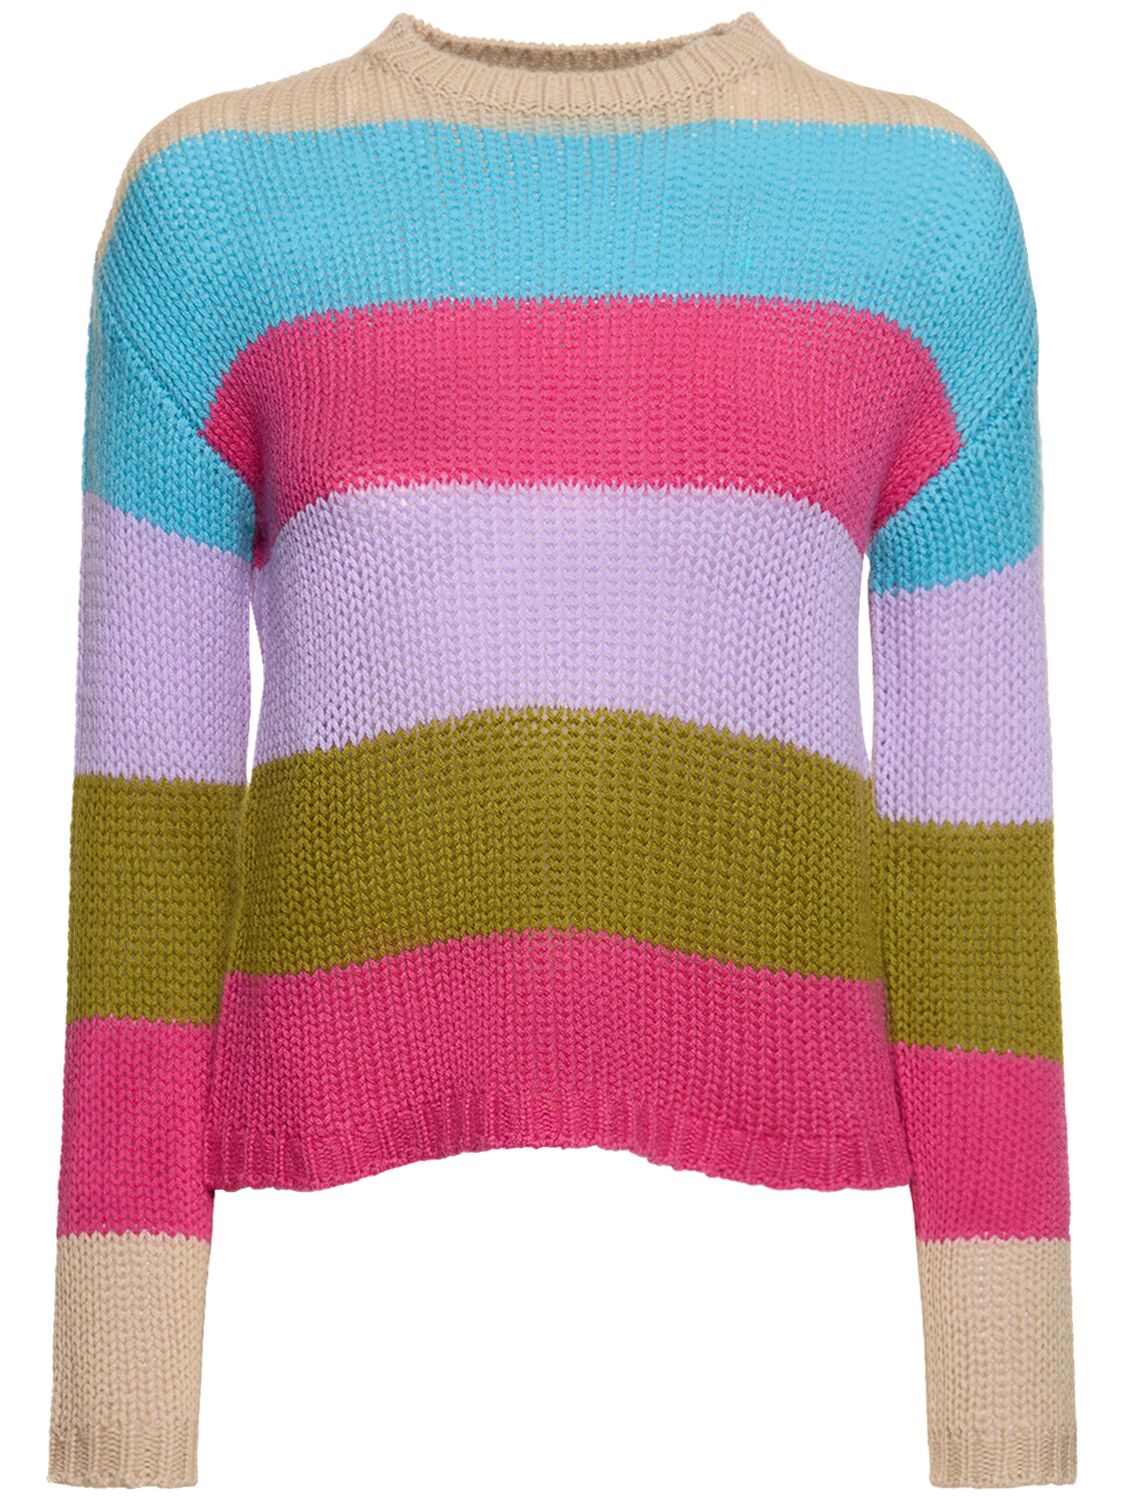 Palco Striped Cashmere Knit Sweater